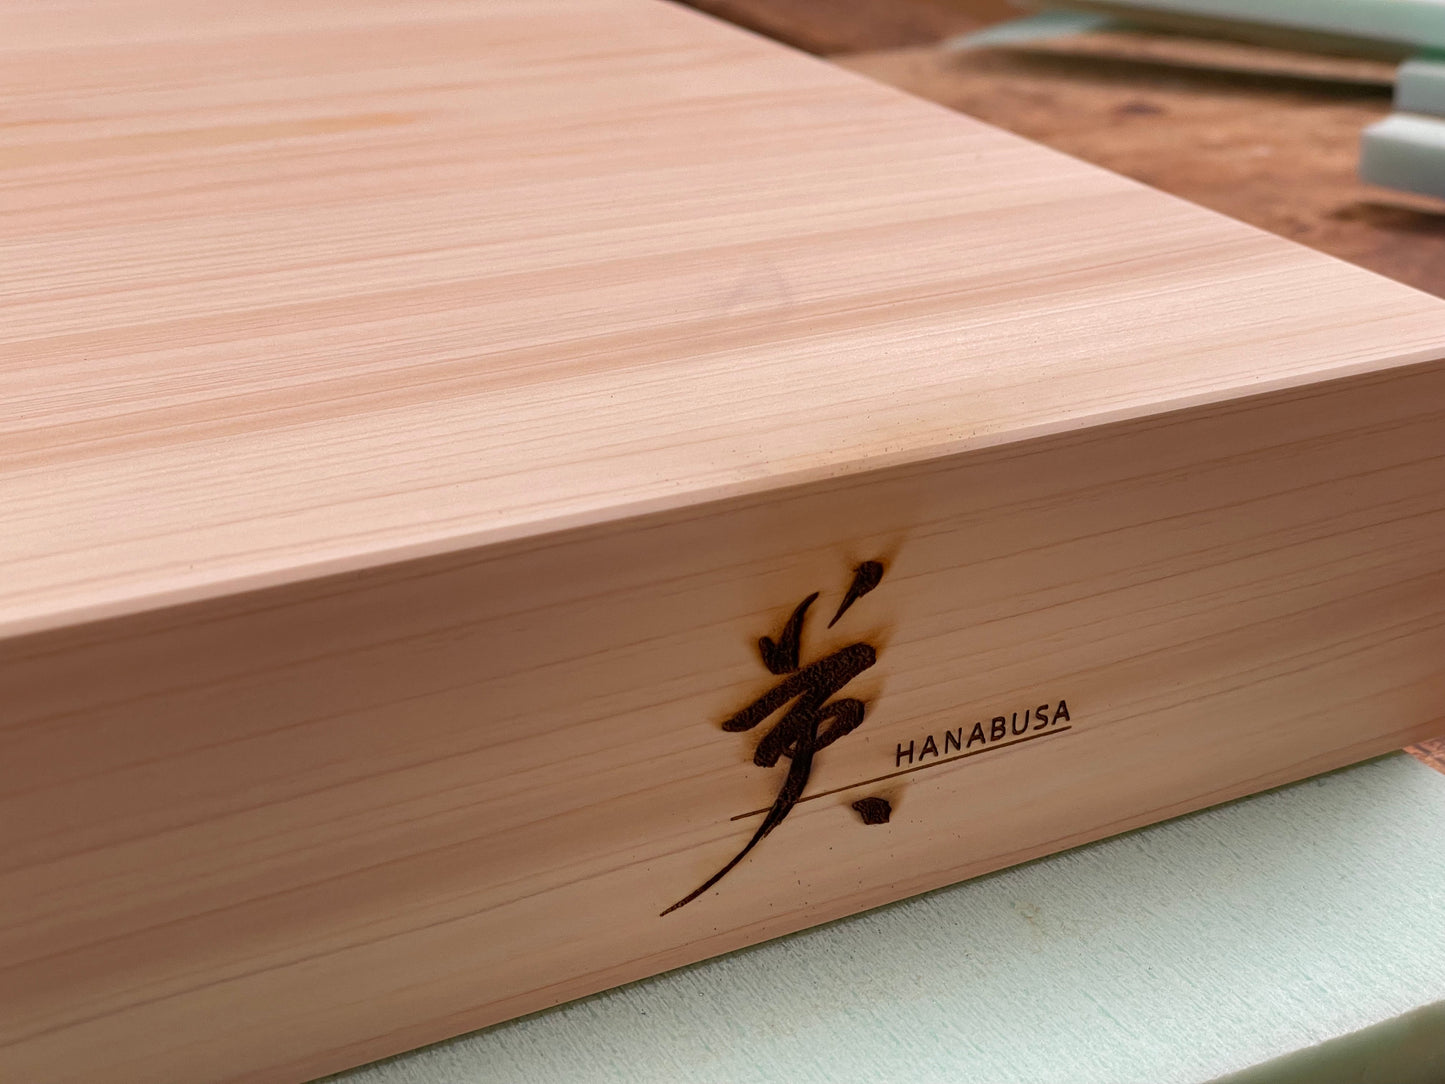 HINOKI cutting board（Japanese Cypress）  No,H-119